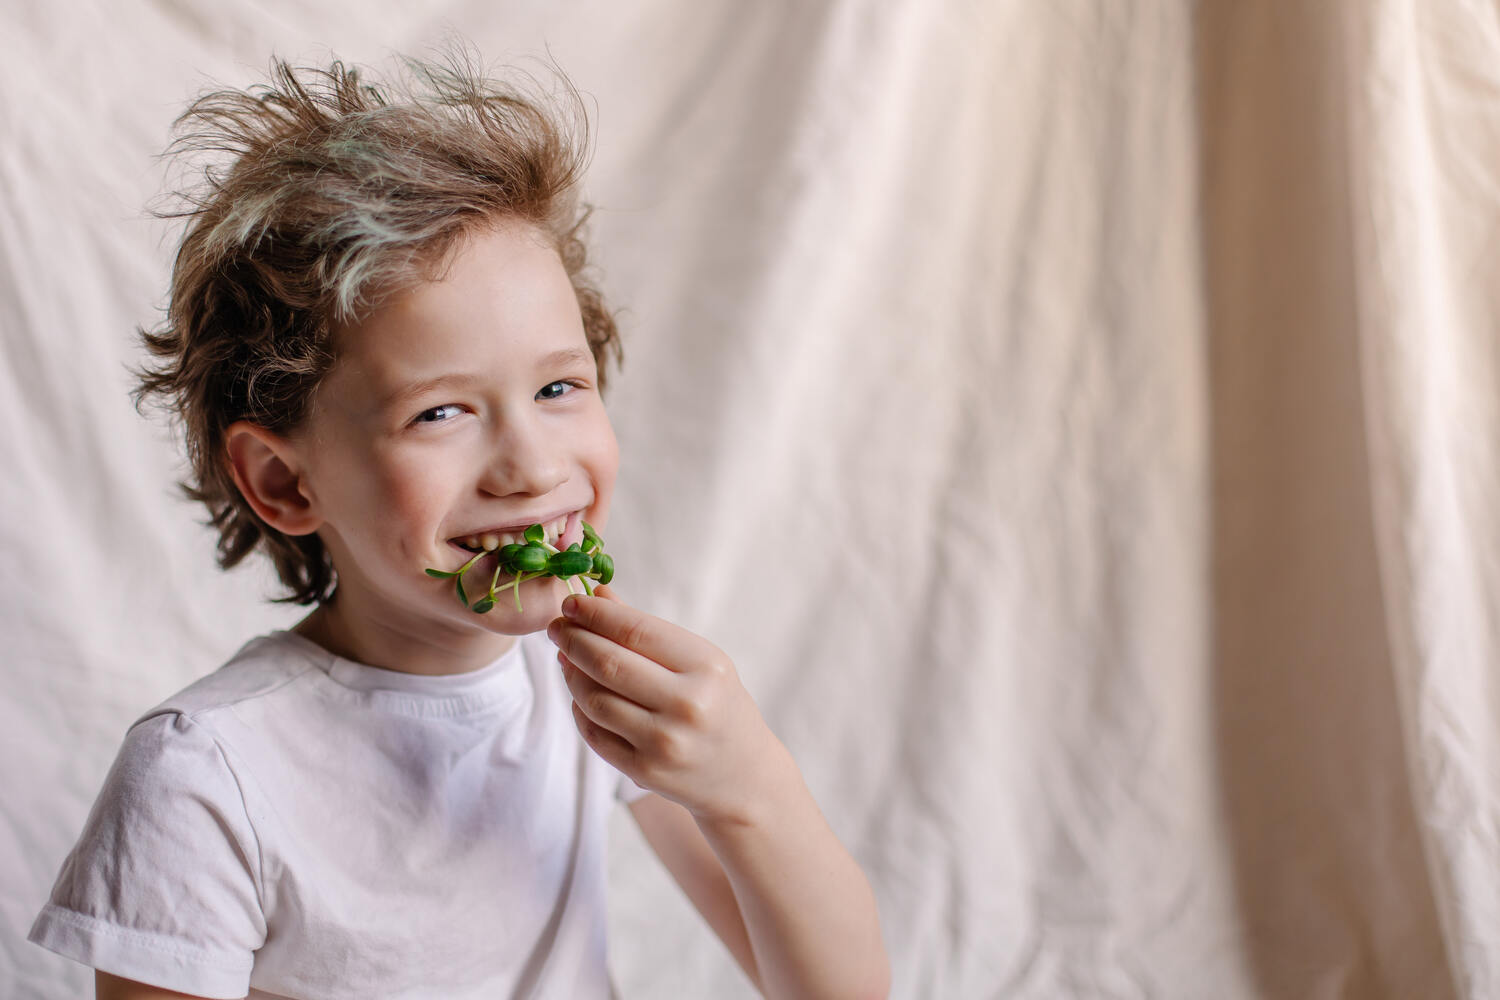 A boy eating green vegetables